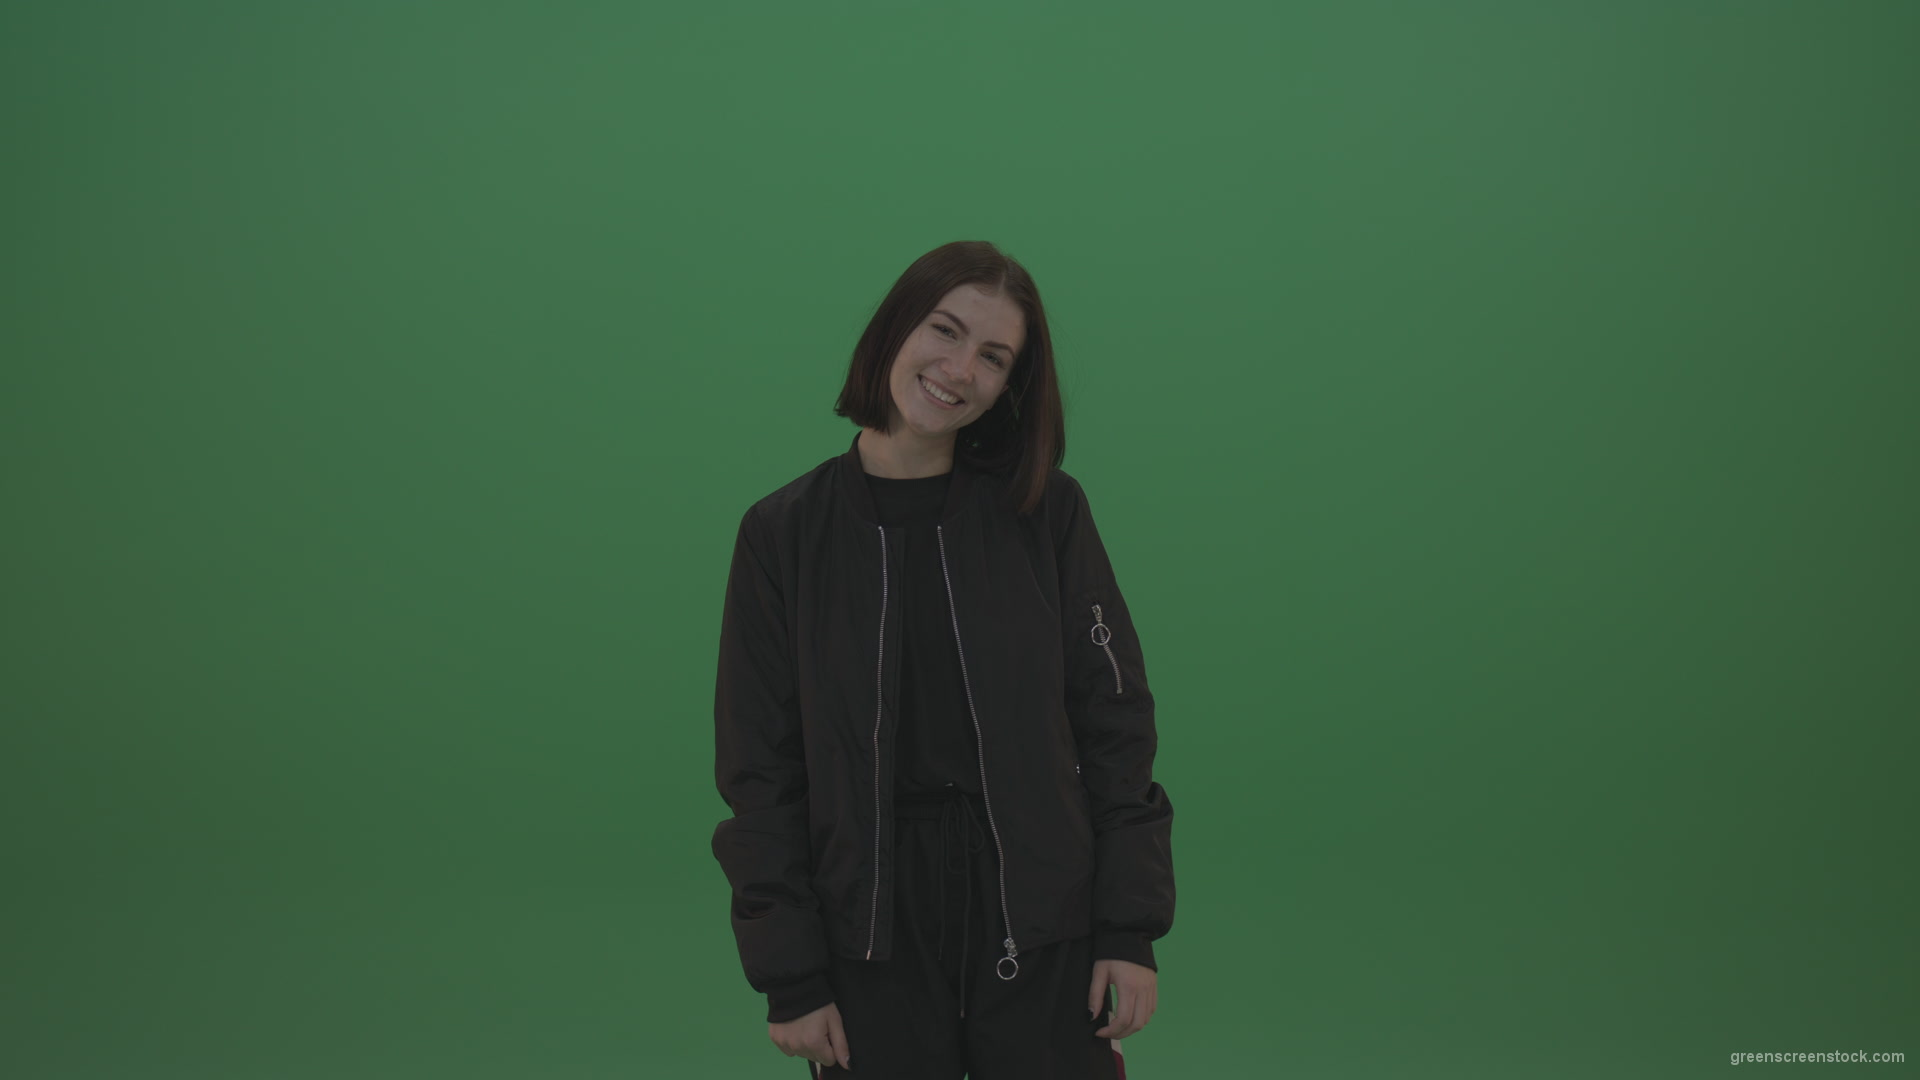 Girl-in-black-wear-smiles-as-she-poses-over-chromakey-background_009 Green Screen Stock